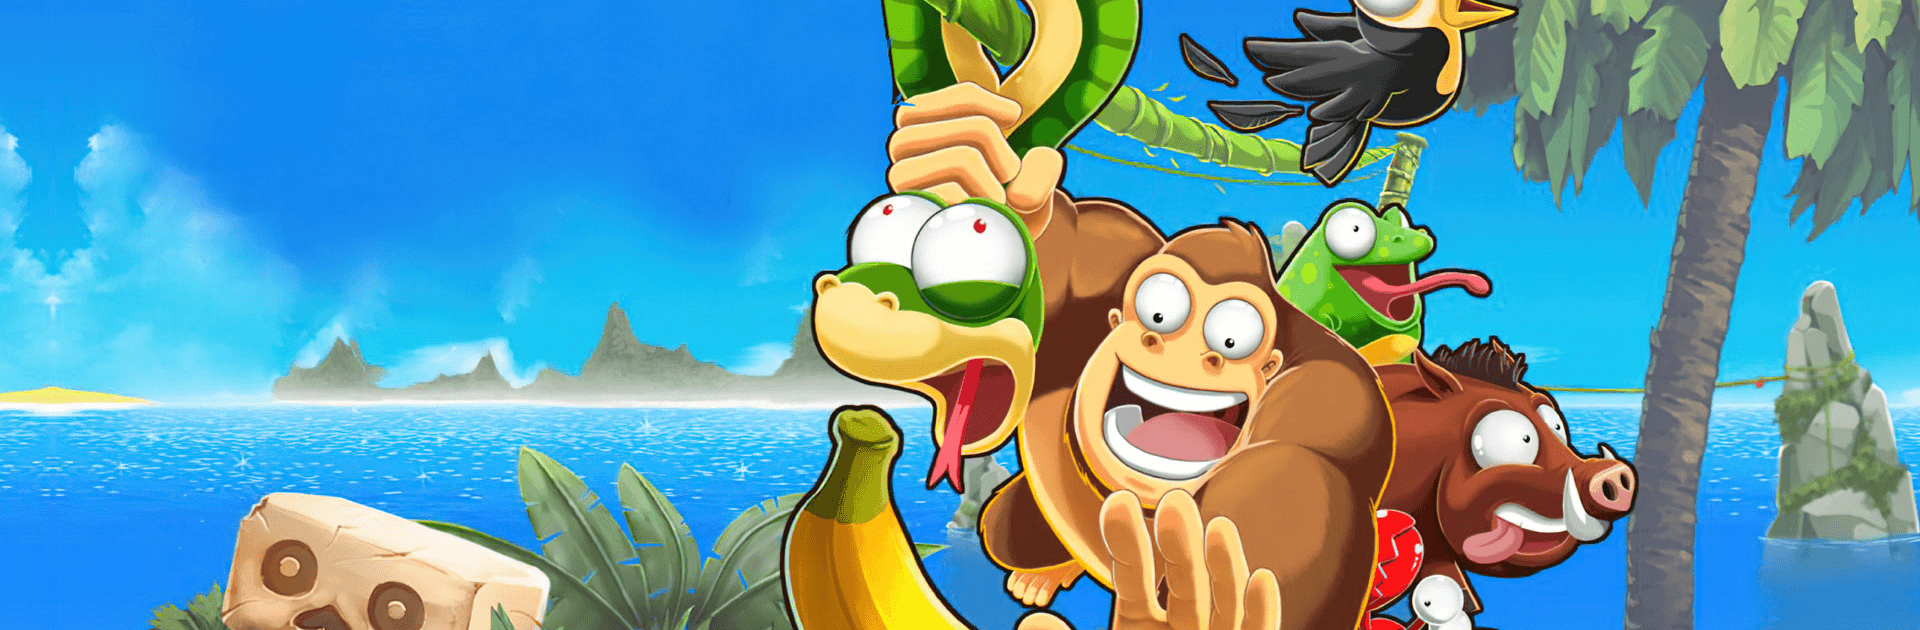 Banana Kong - Download & Play for Free Here